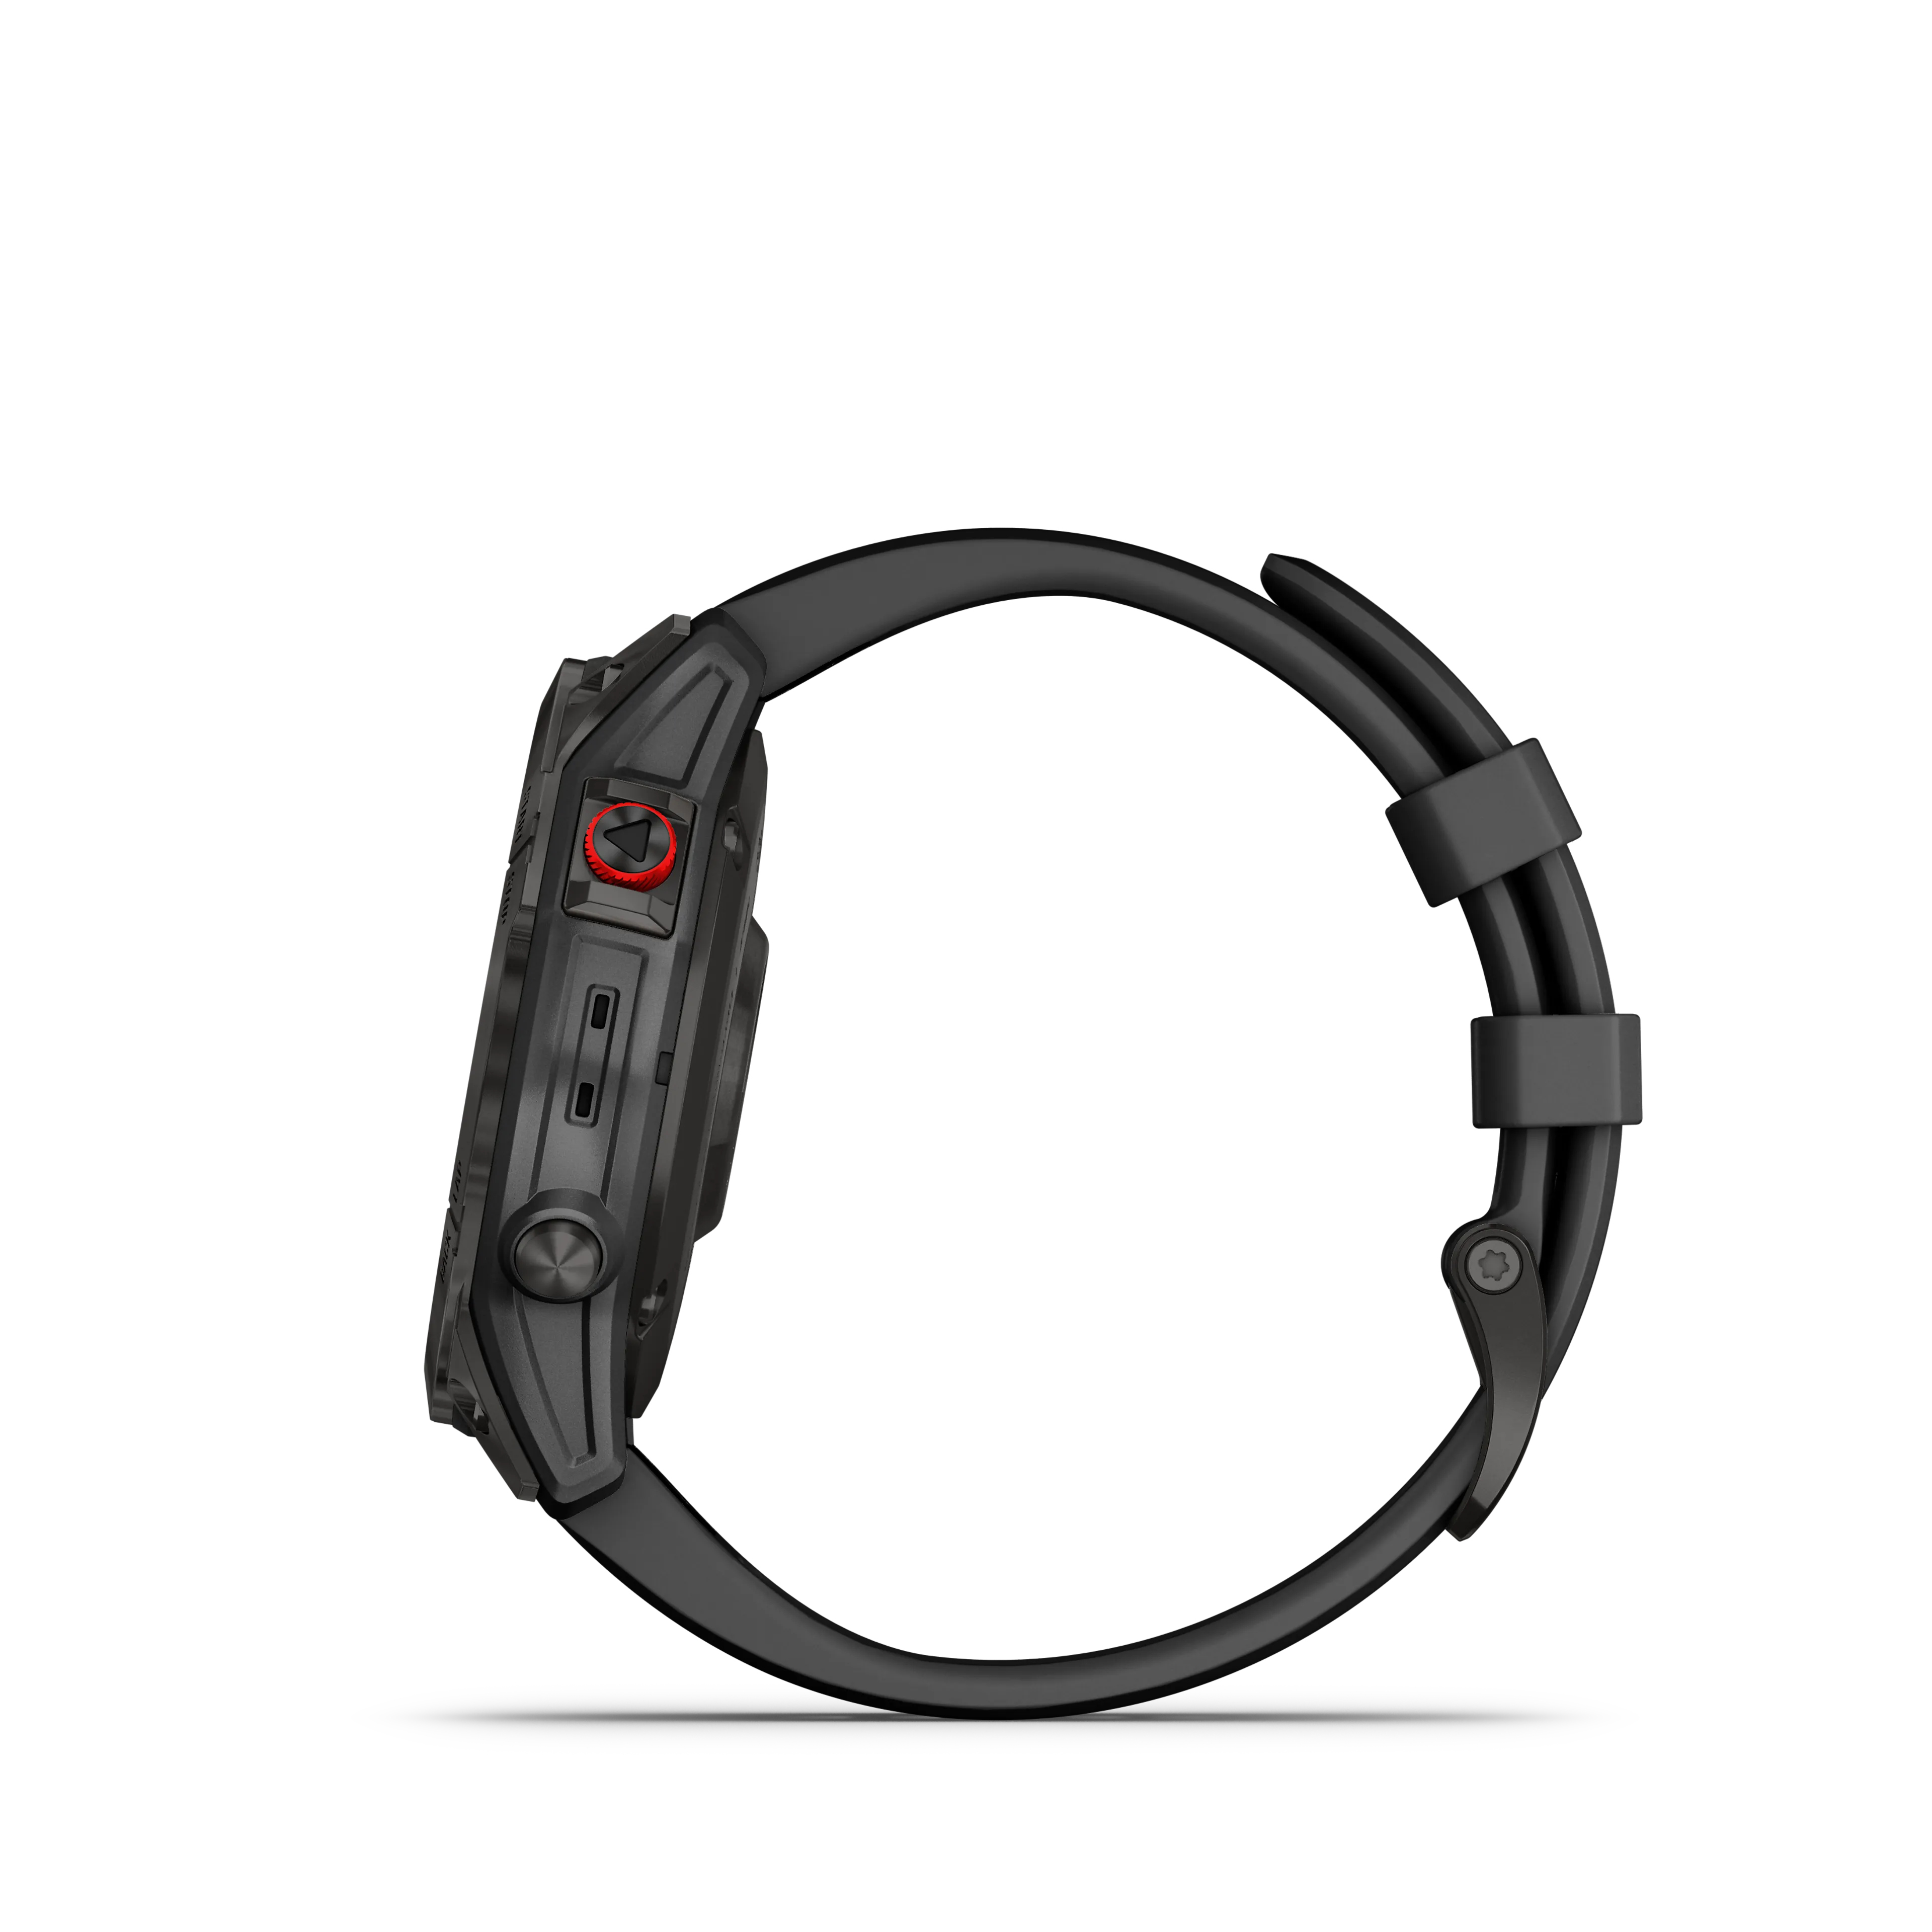 epix Sapphire Black – AMOLED Smartwatch